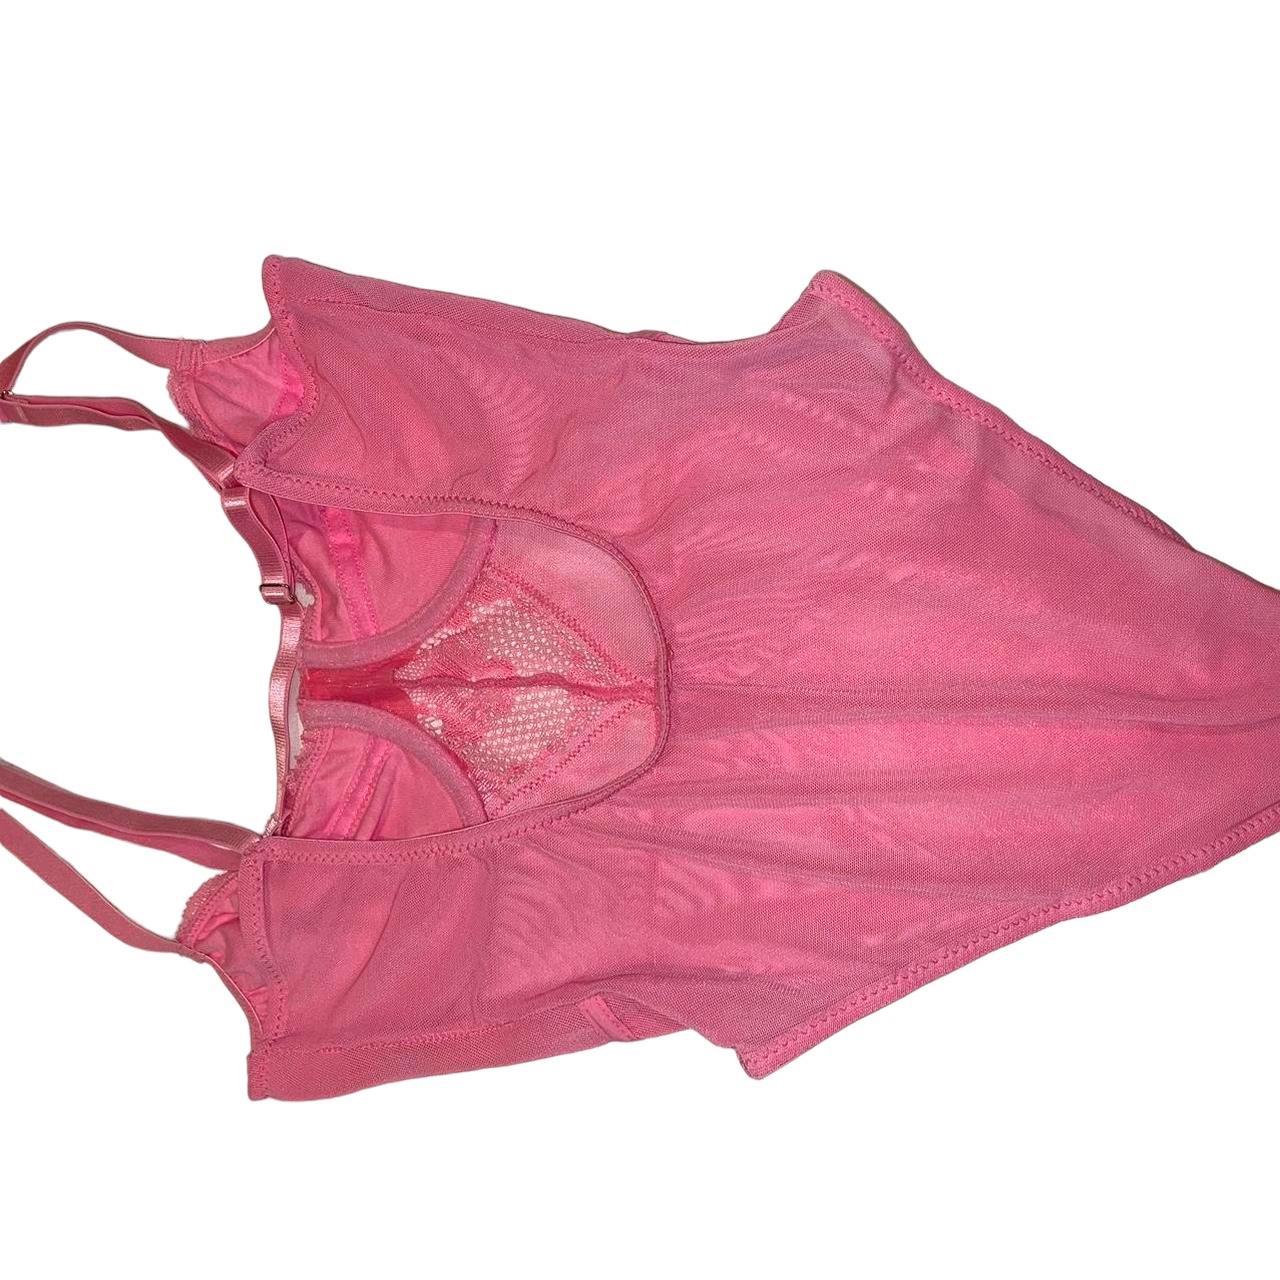 Floral Lace Mesh Lingerie Bodysuit in color “Pink - Depop